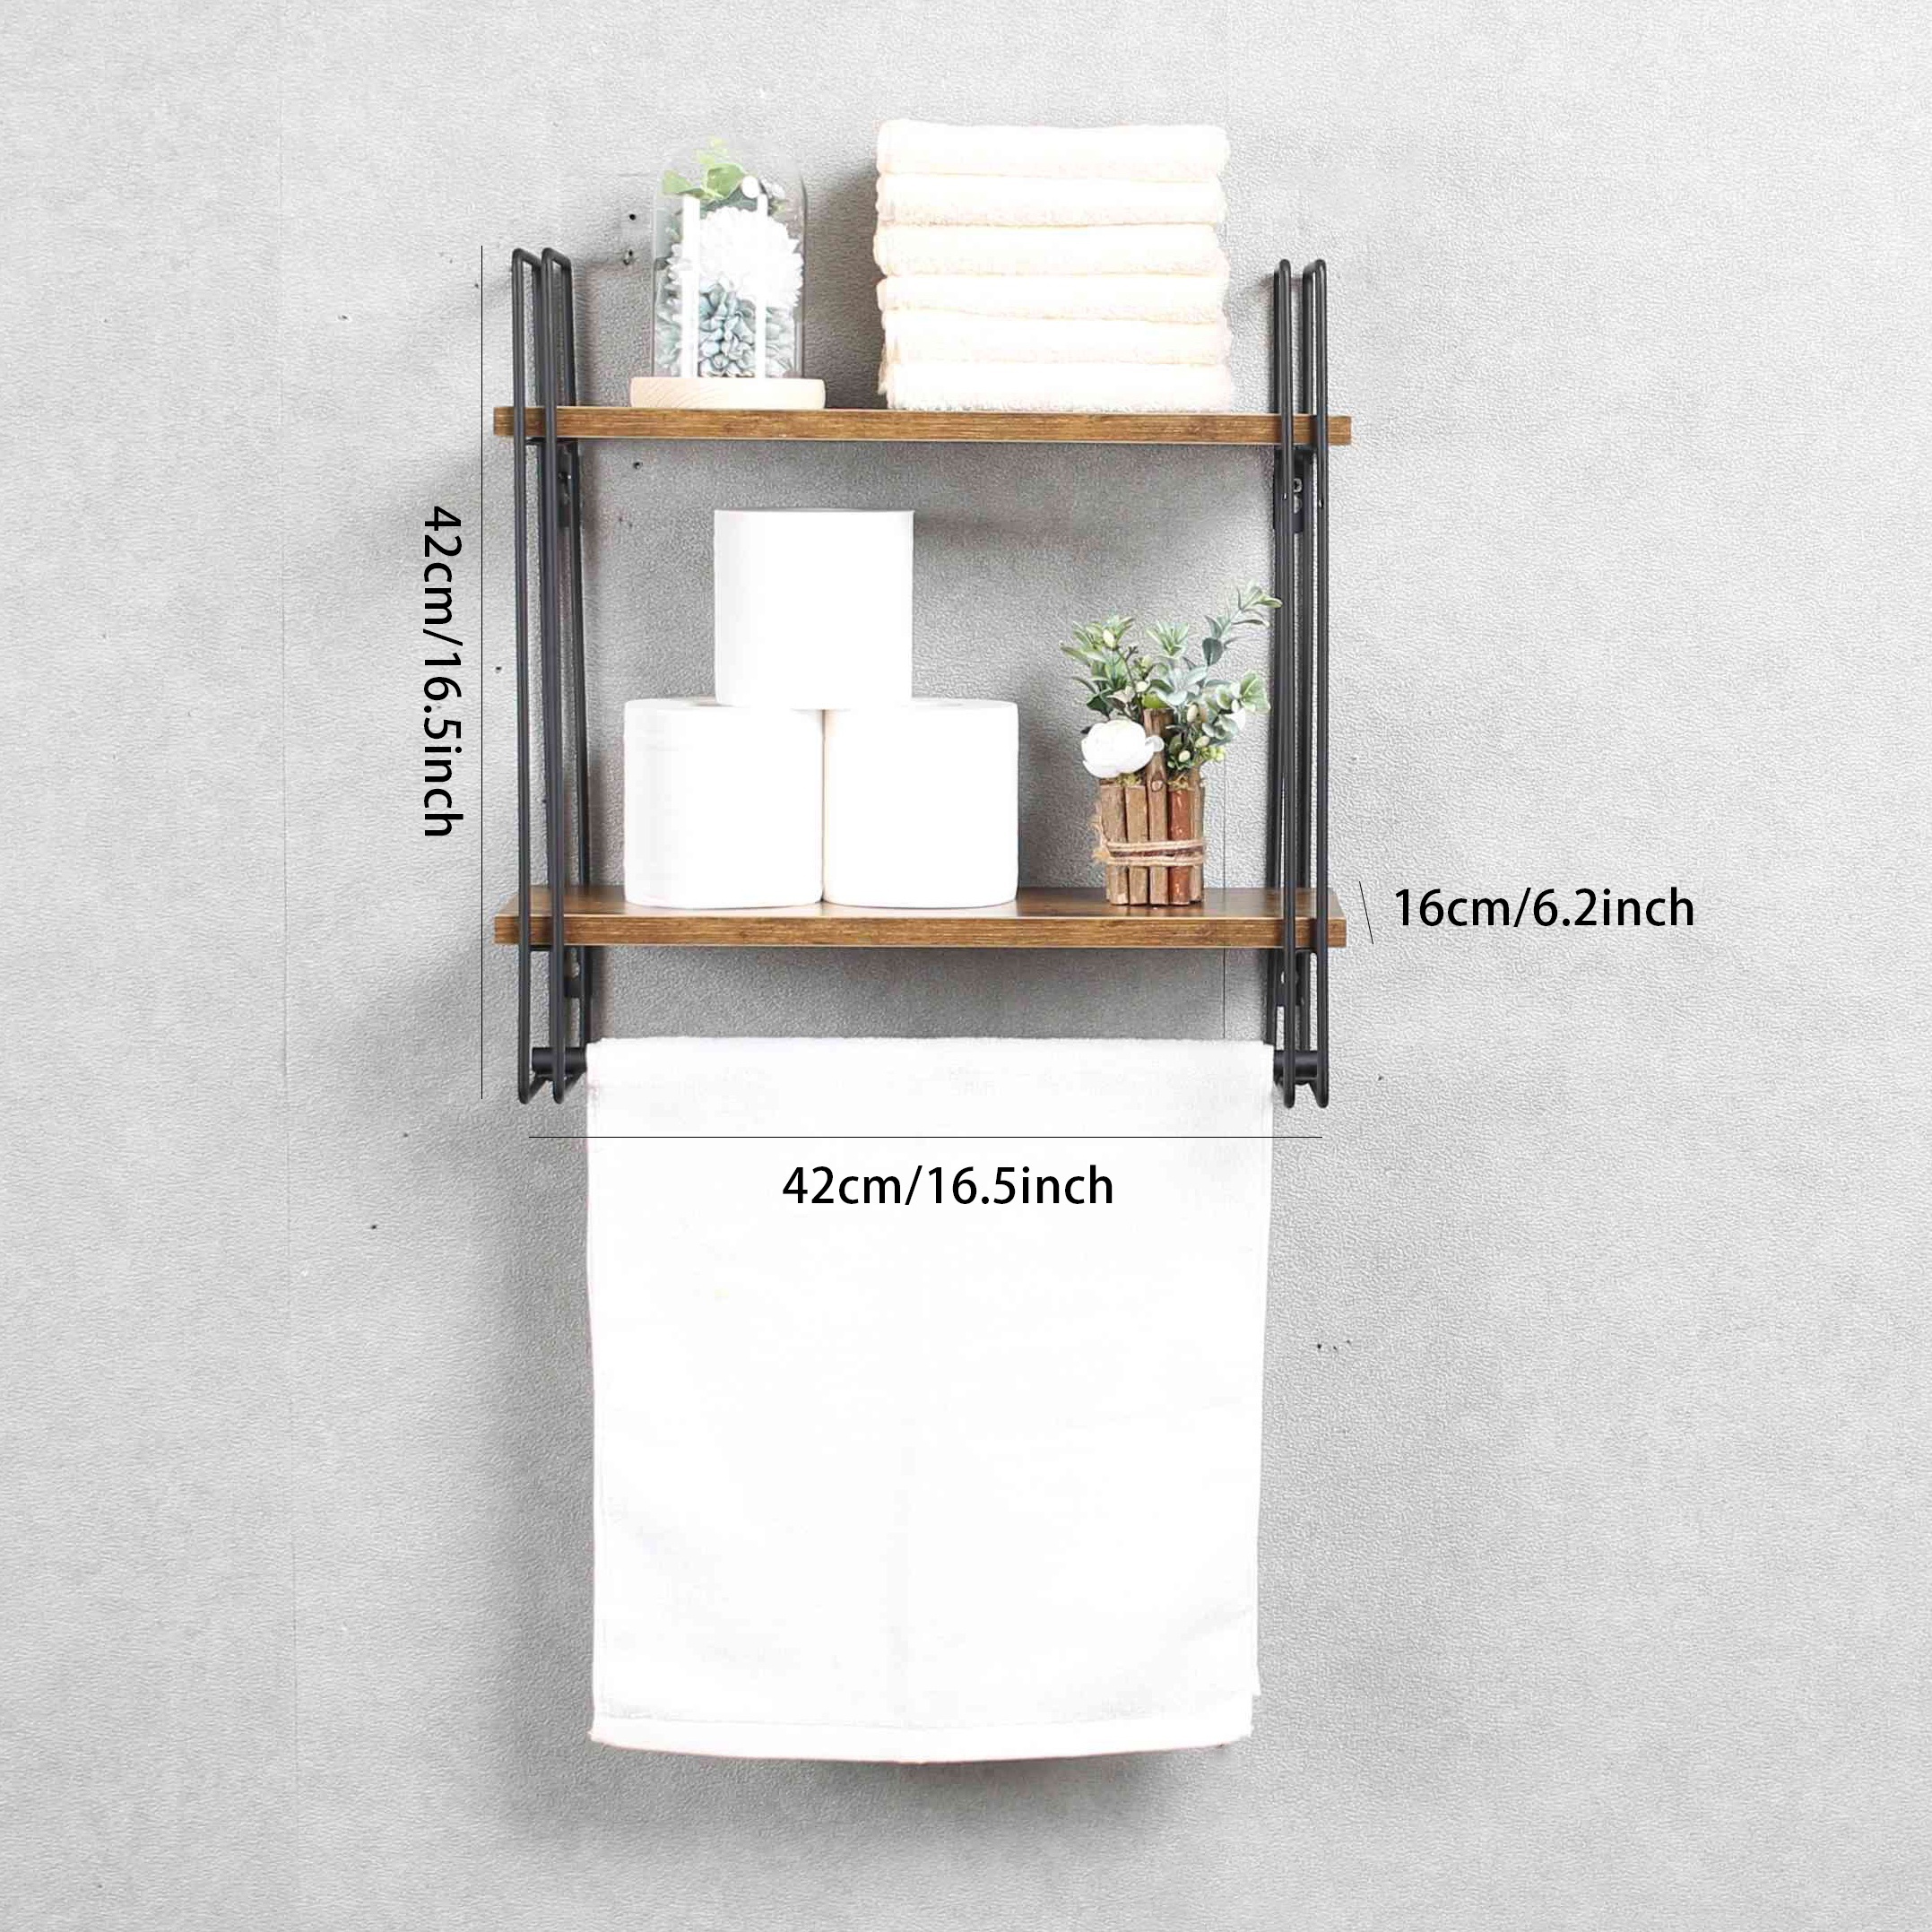 2-Tier Wood Wall Mounted Bathroom Shelf with Towel Rack